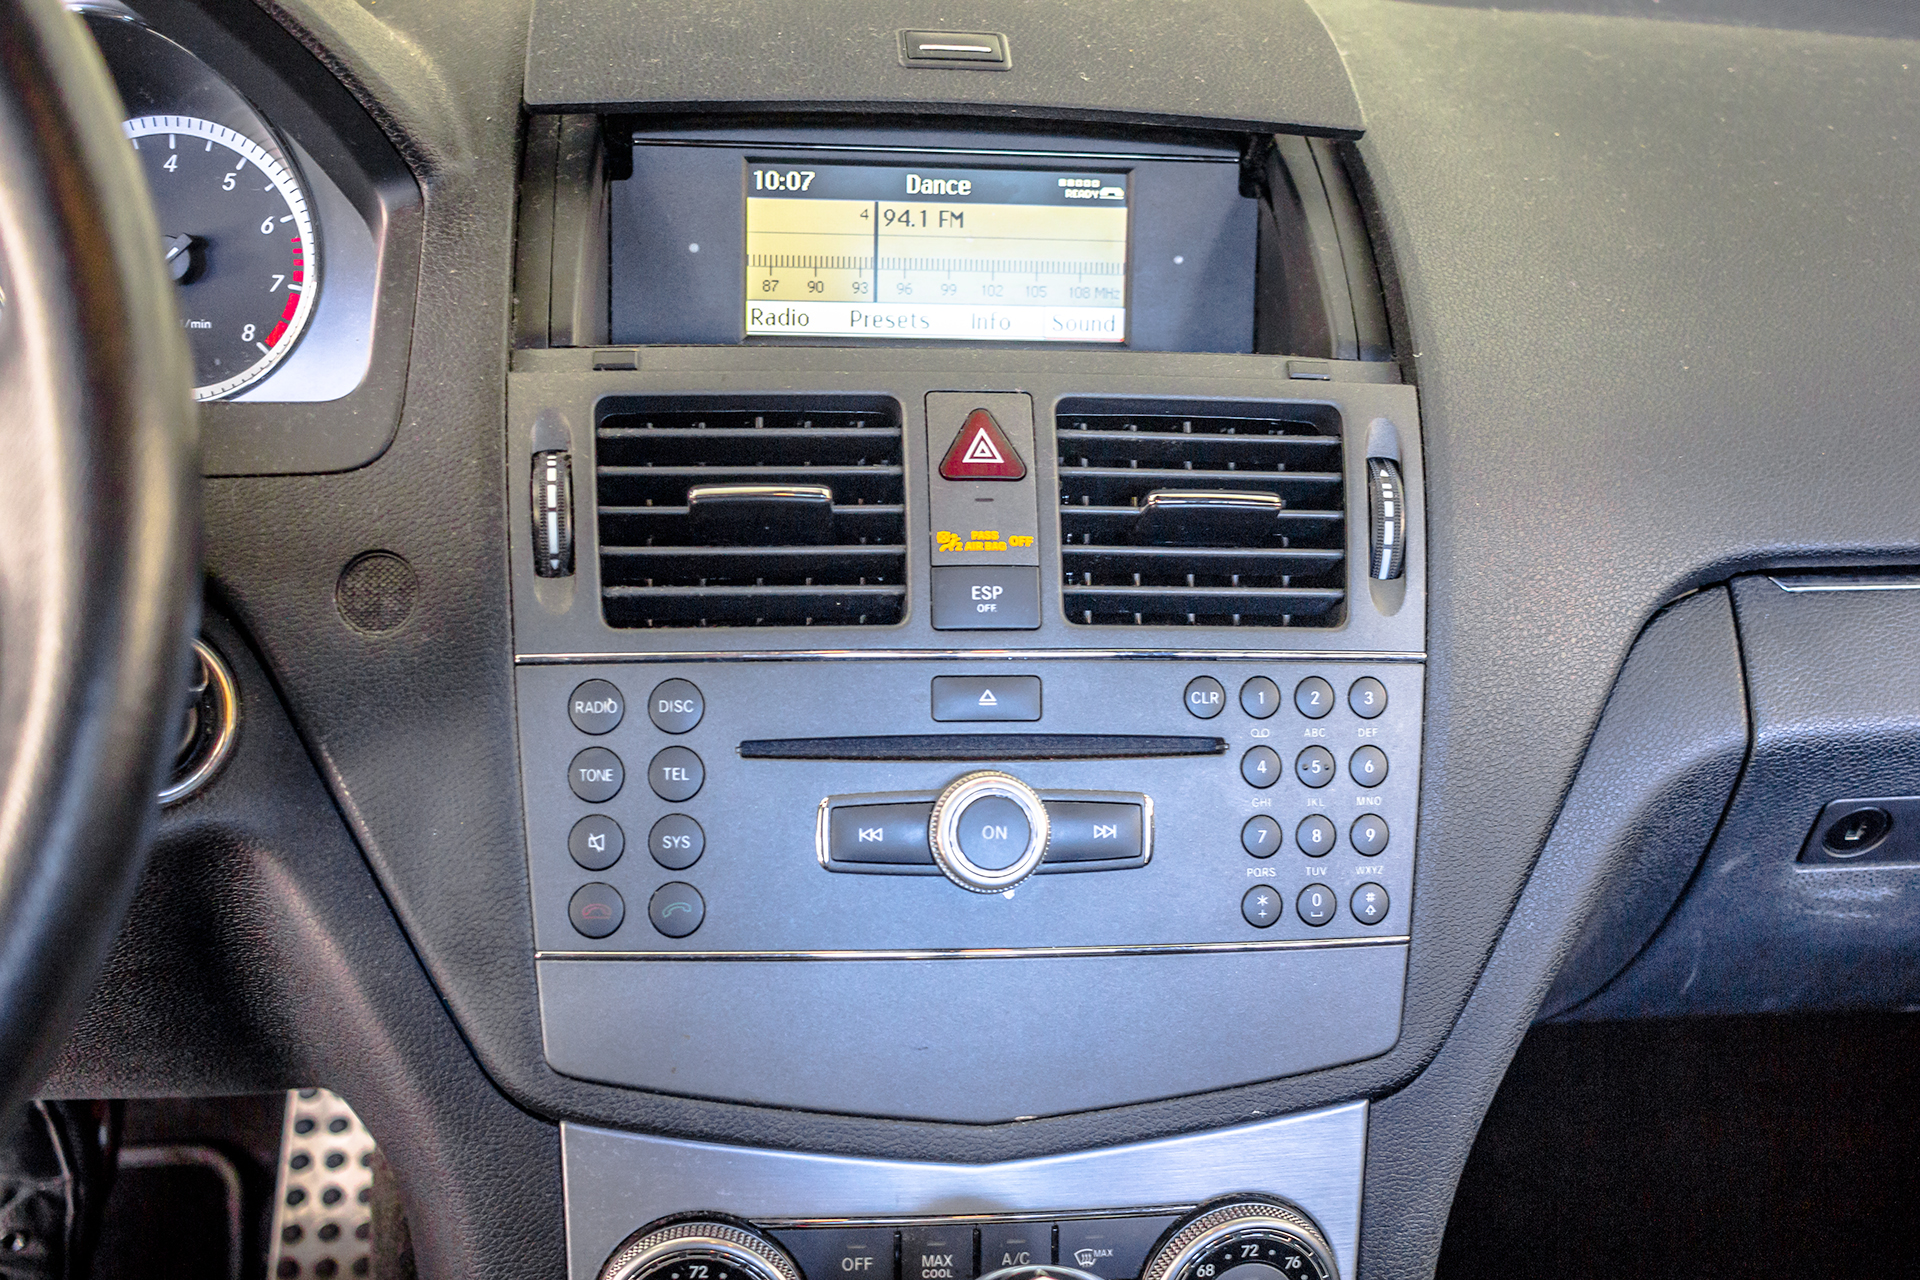 2010 Mercedes Benz C300 Factory Radio.jpg